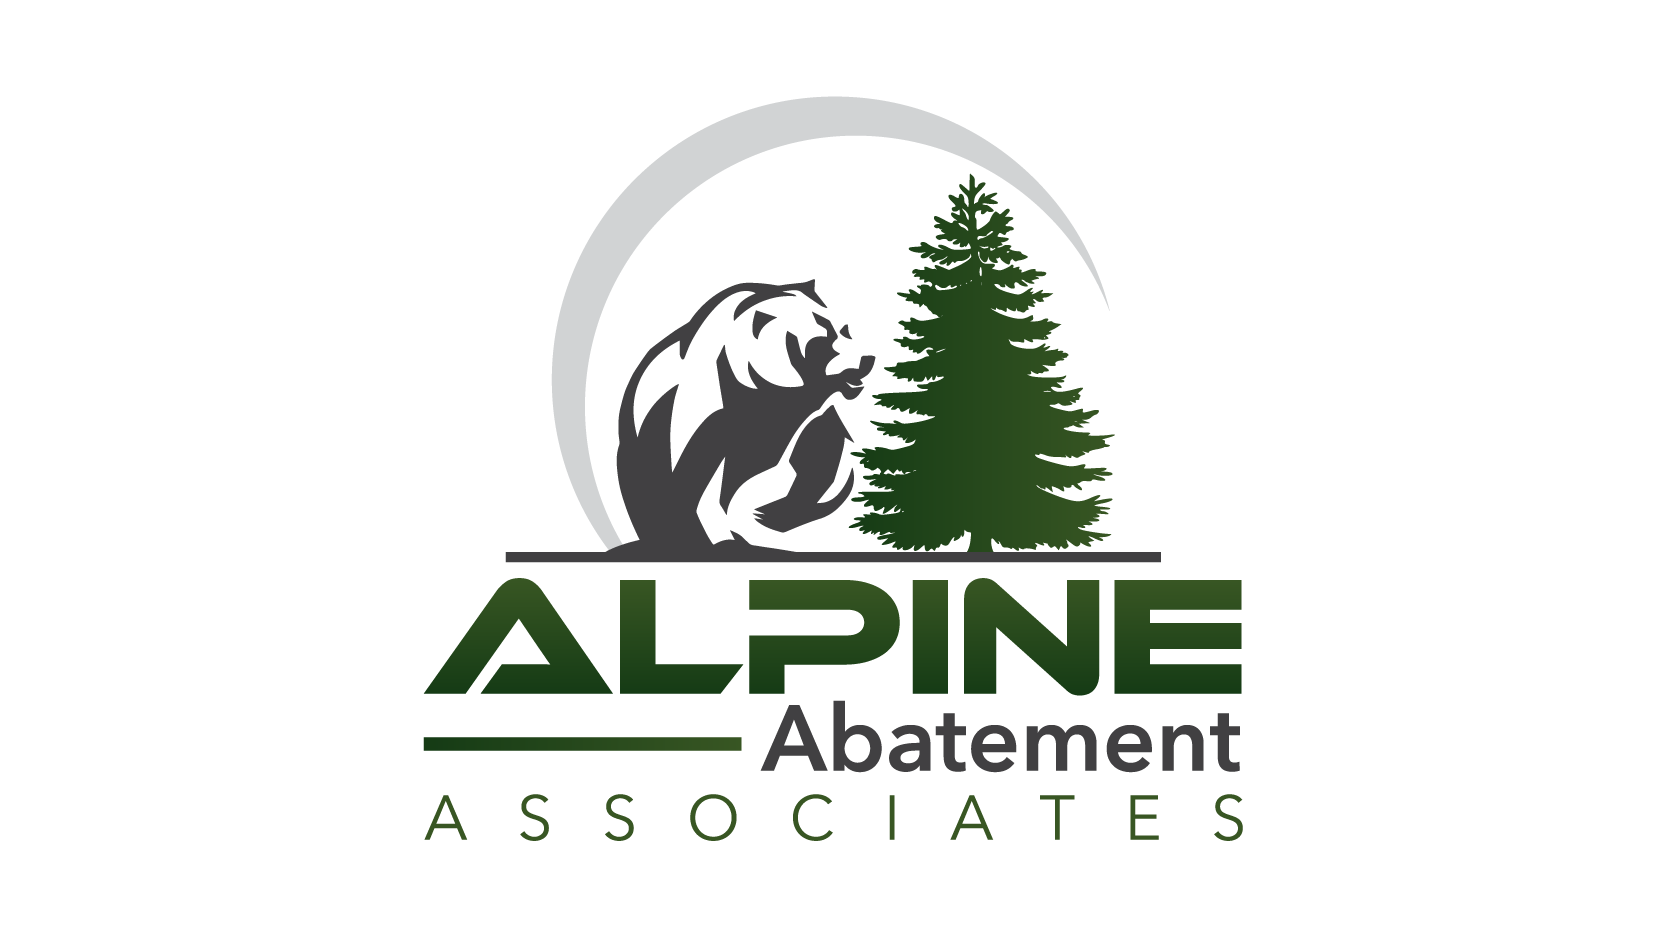 Alpine Abatement Associates